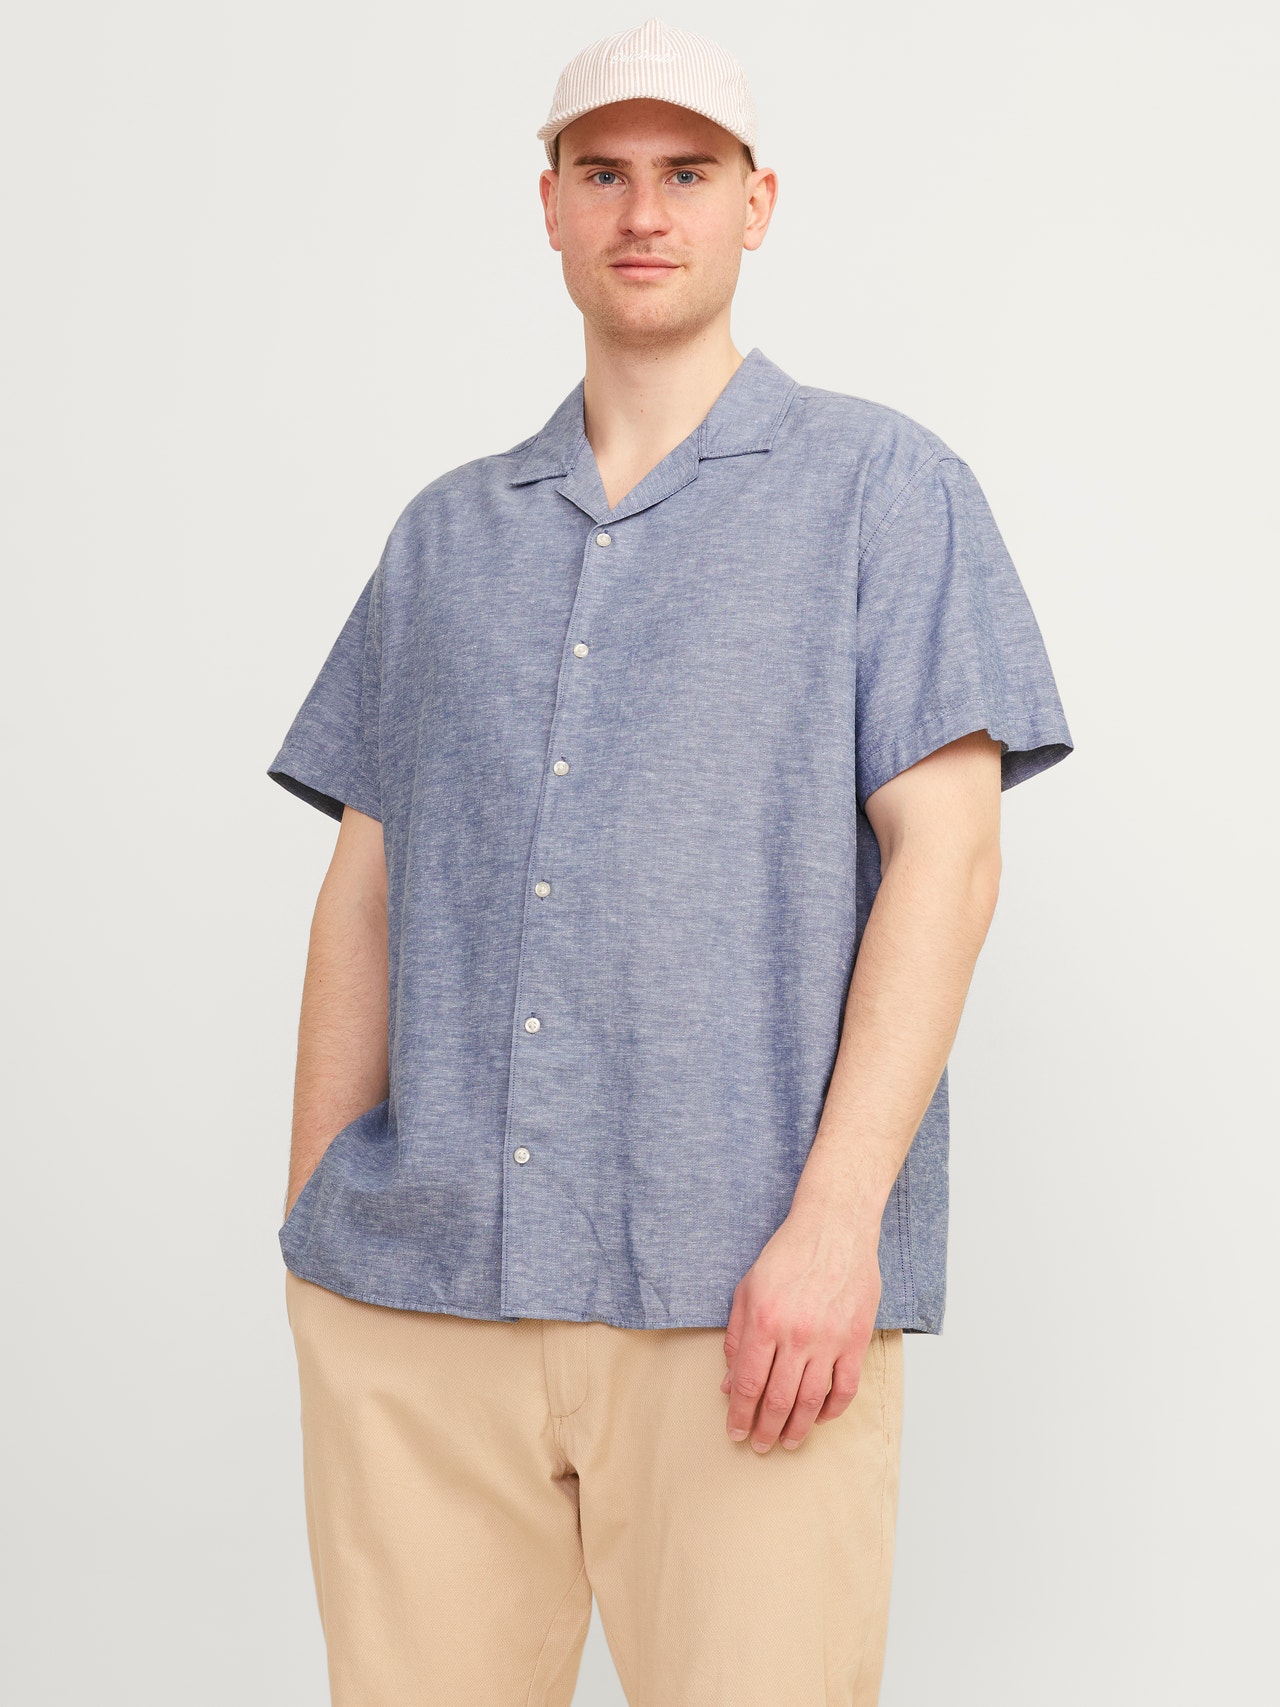 Jack & Jones Plus Size Slim Fit Skjorte -Faded Denim - 12250653